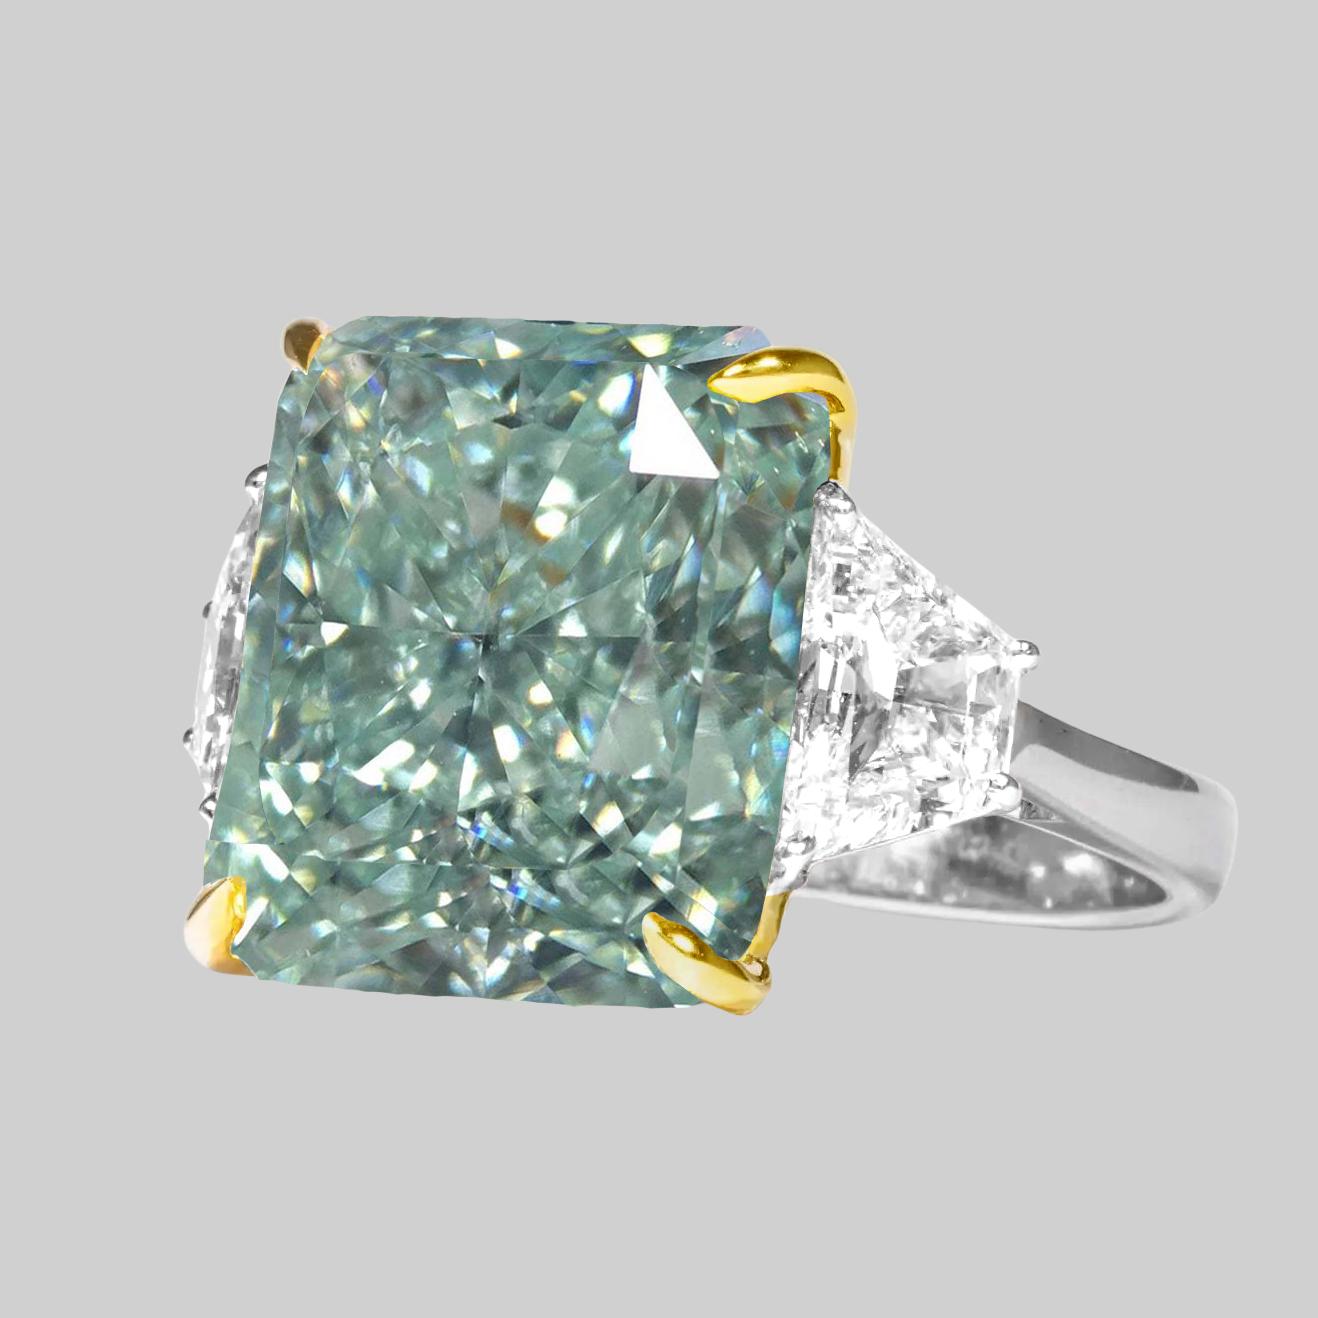 GIA Certified 5 Carat Fancy Intense Bluish Green Cushion Cut Diamond Ring
100% eye clean 
investment grade diamond